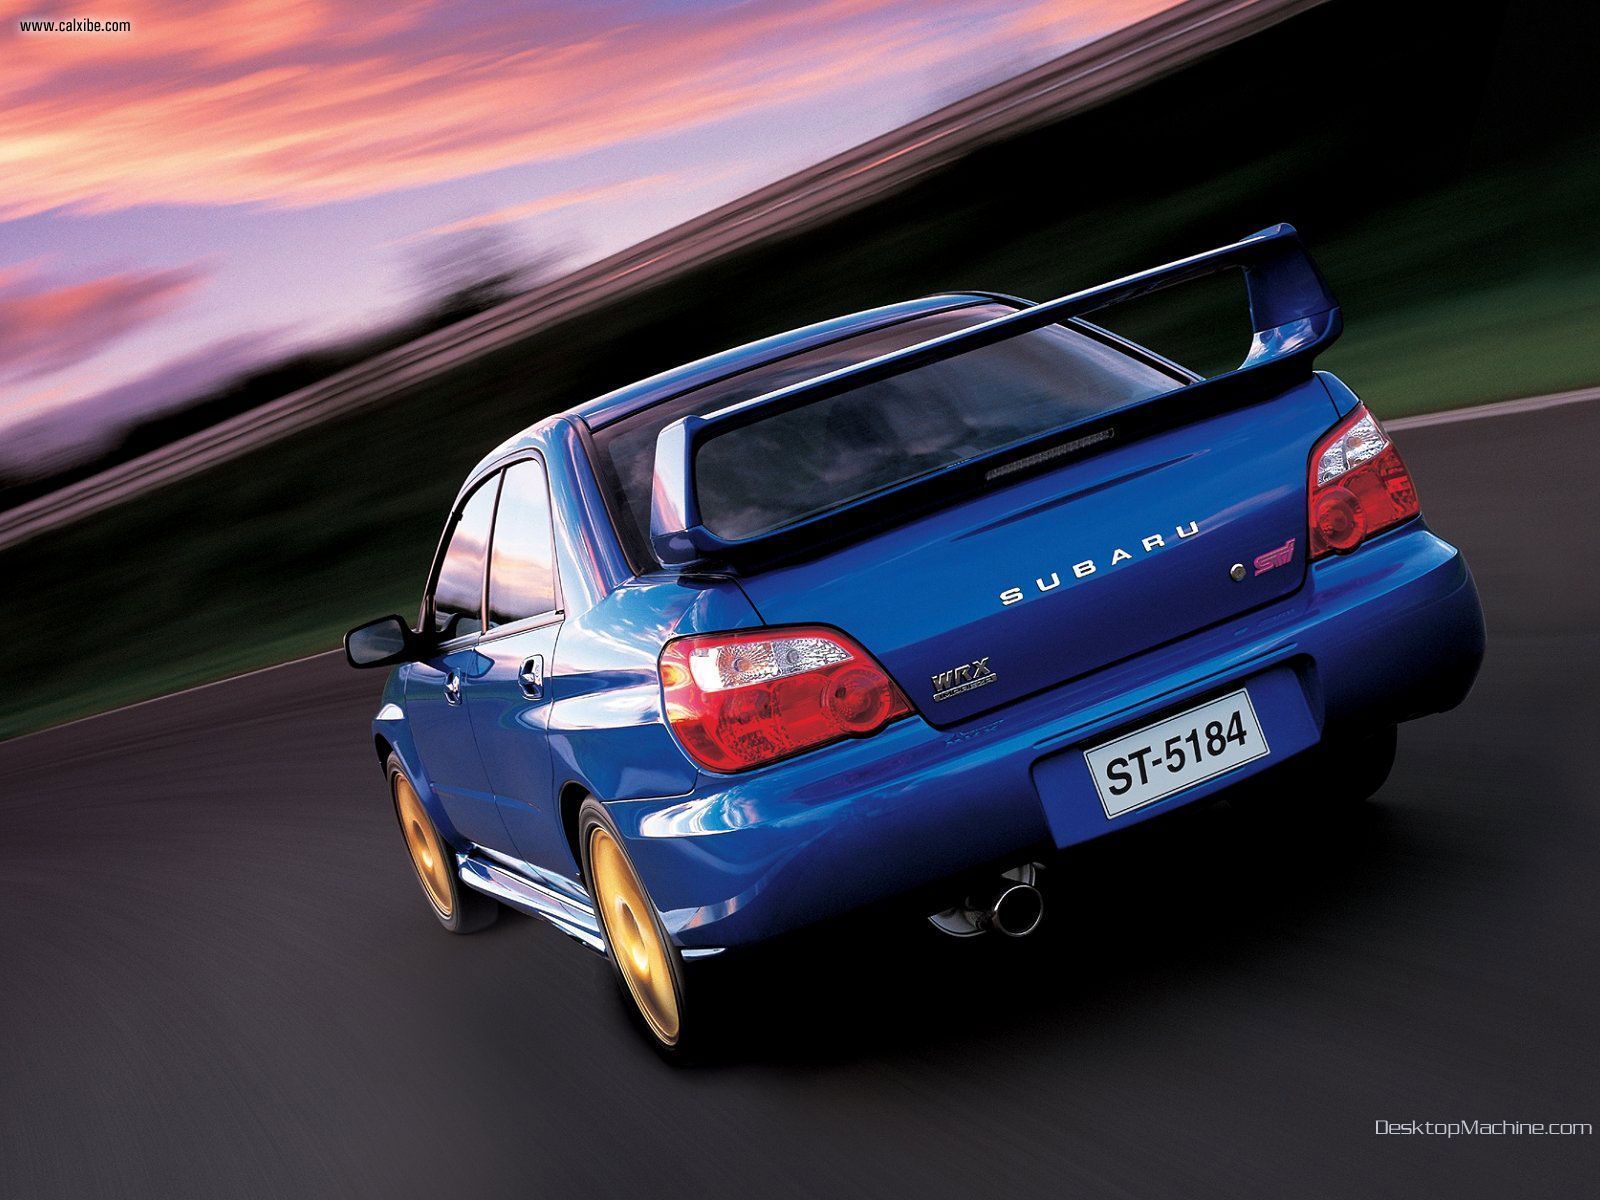 Cars: Subaru Impreza WRX STI, picture nr. 22930